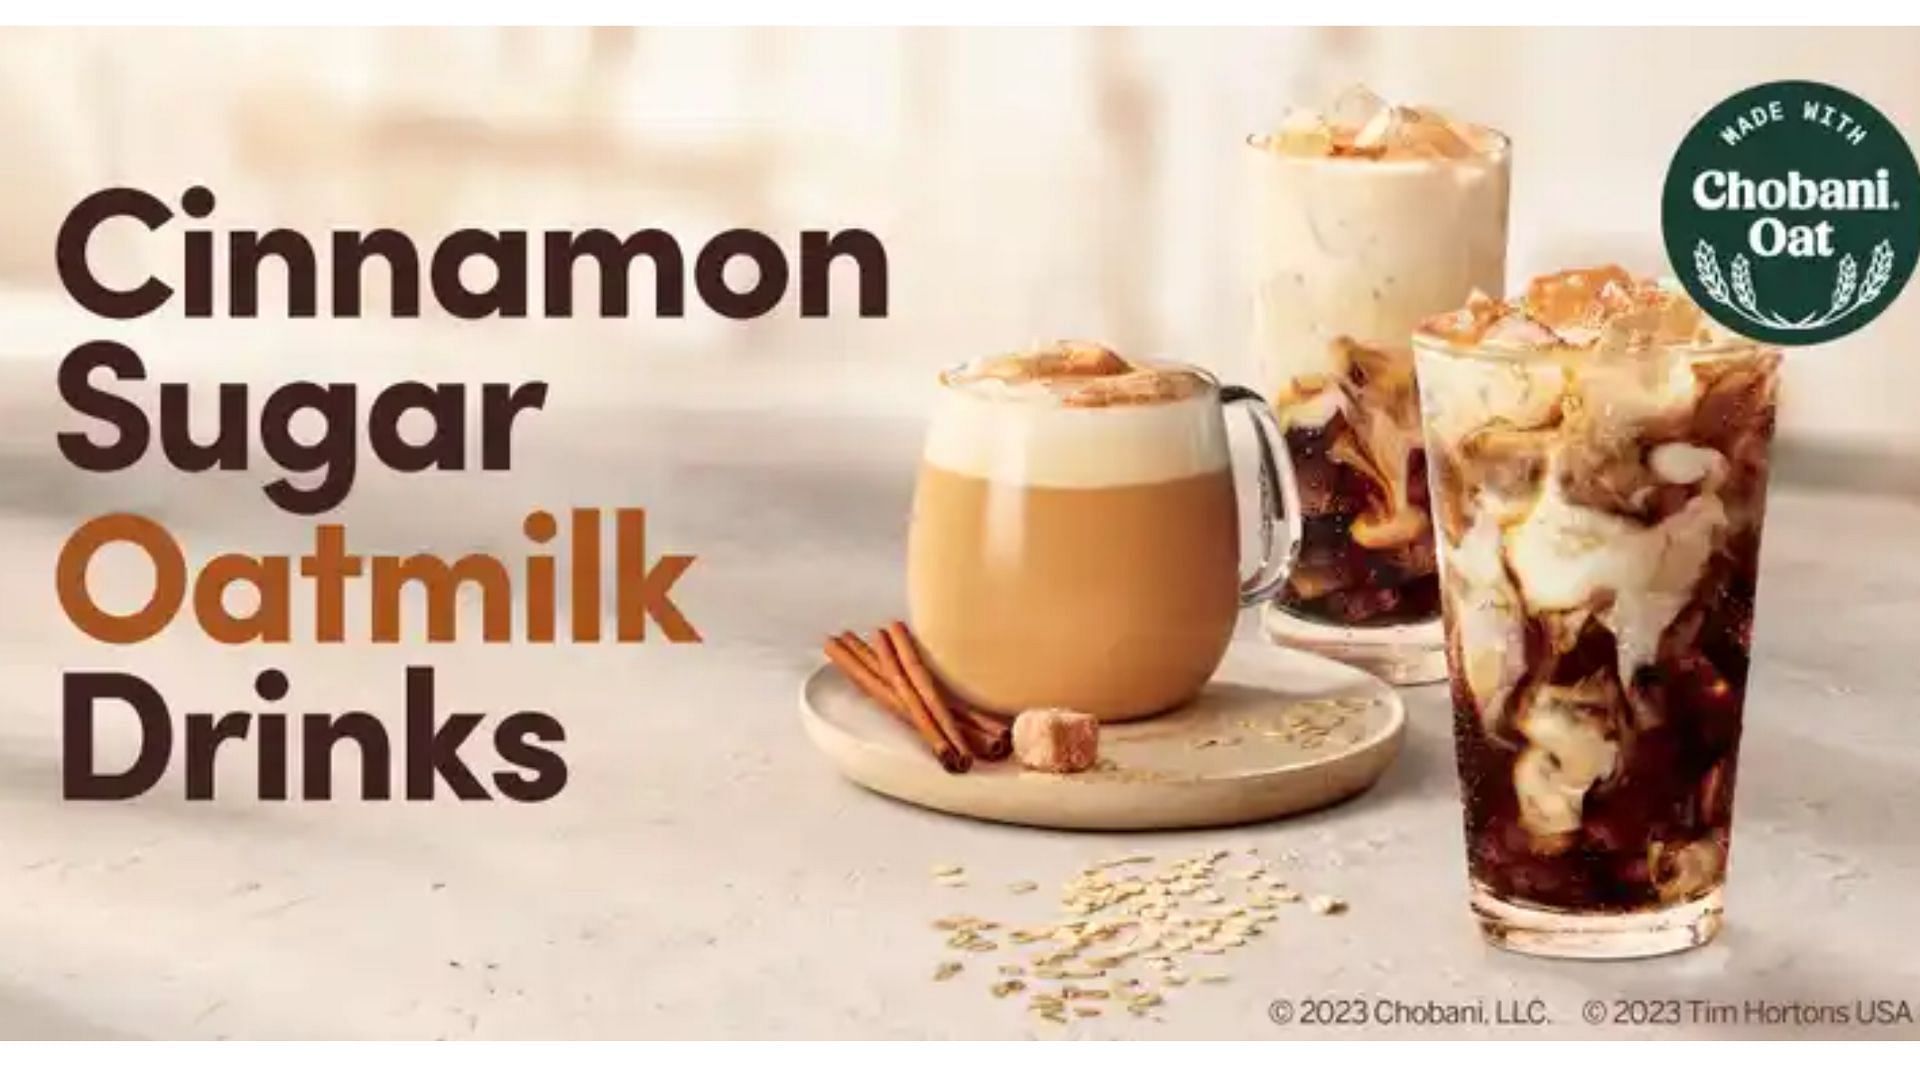 Tim Hortons Rolls Out Cinnamon Sugar Oatmilk Menu items - QSR Magazine